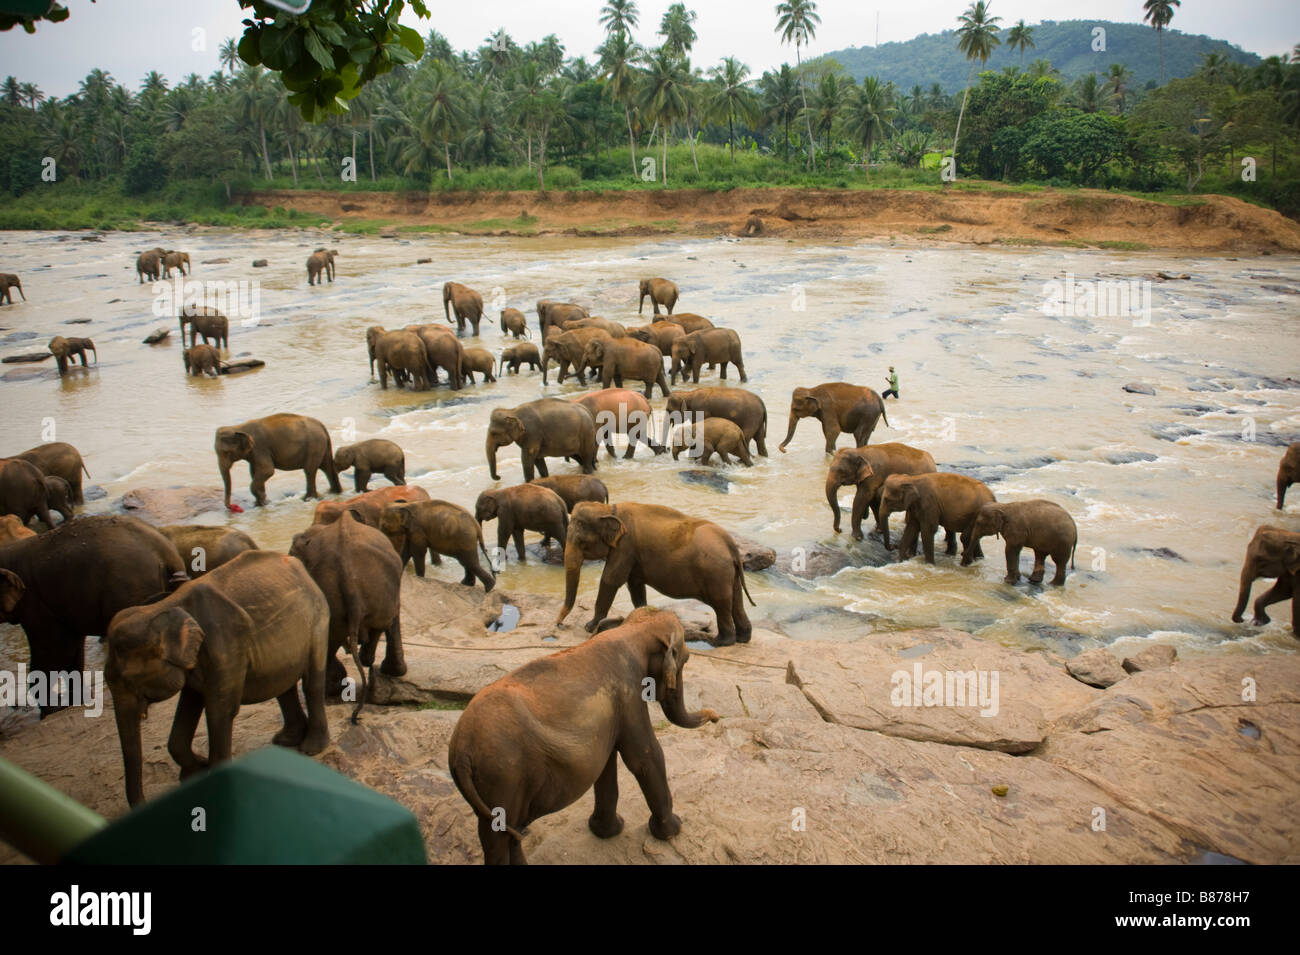 Elephant orphanage in river Kandy Sri Lanka 3697 Stock Photo - Alamy